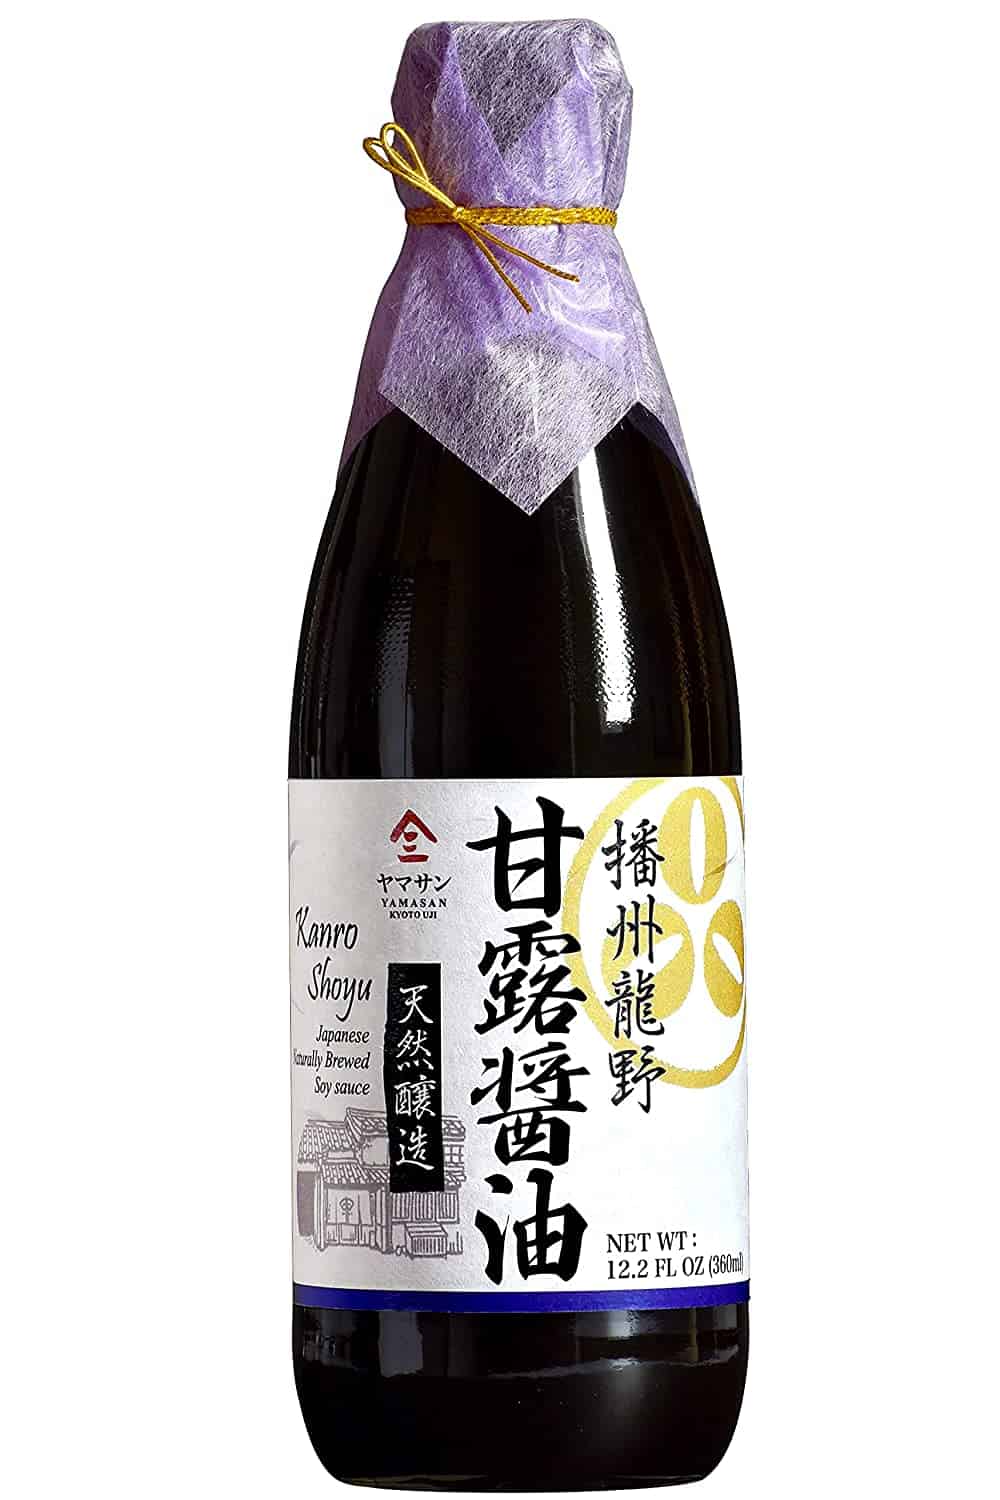 Meilleure sauce soja à double infusion (saishikomi shoyu) - Yamasan Double Brewed Vintage